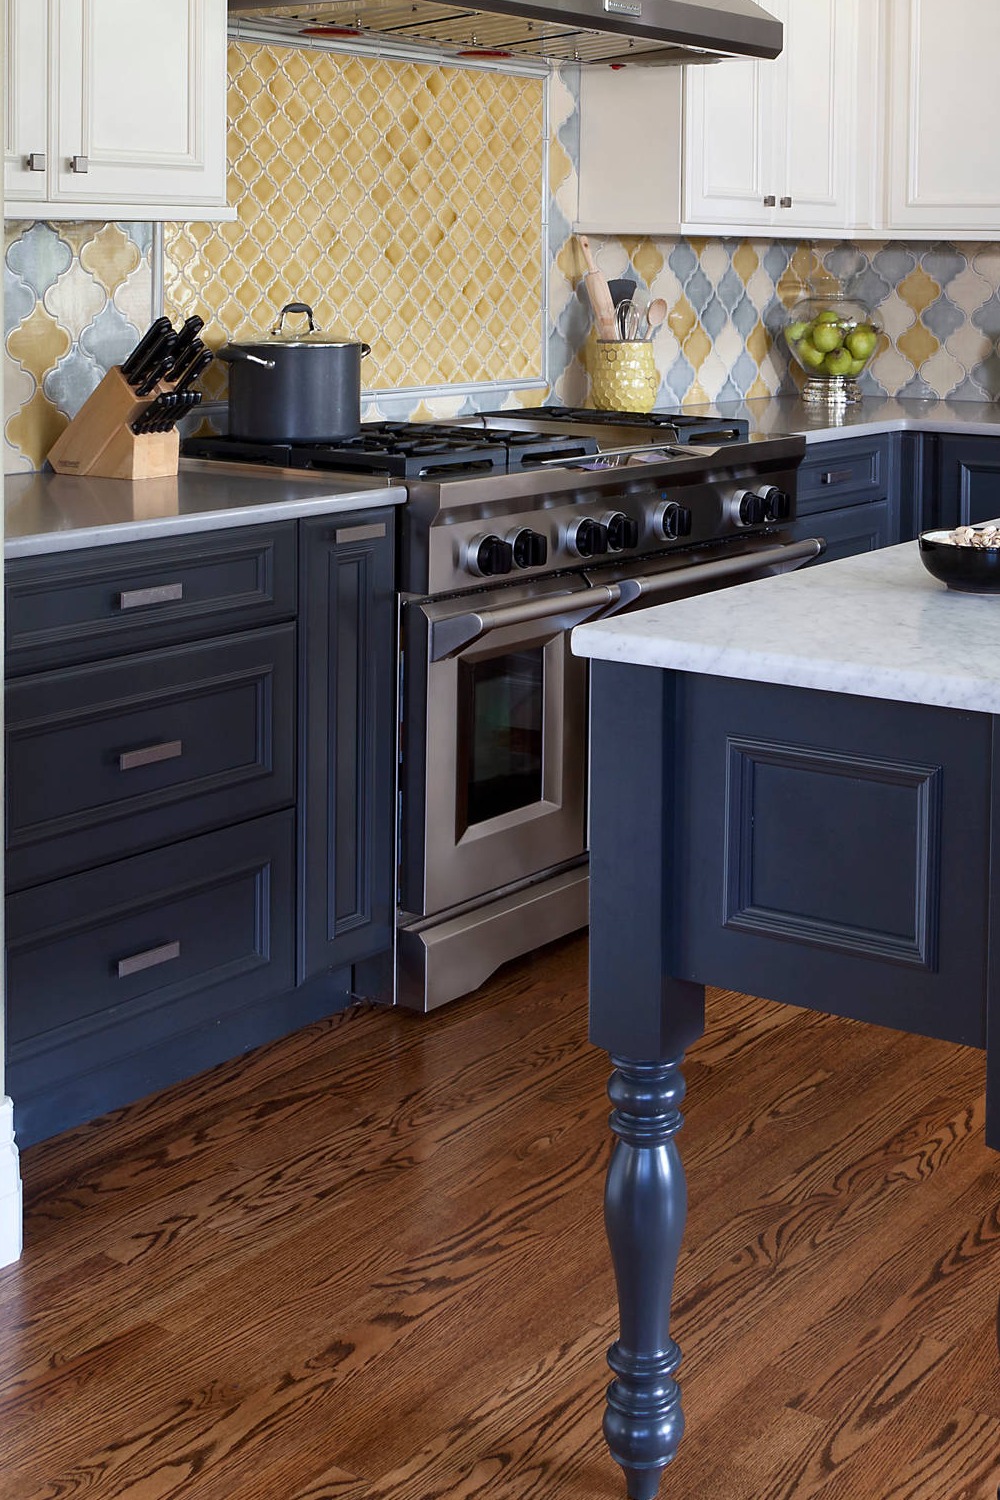 Blue Base White Wall Cabinets Marble Island Quartz Kitchen Countertops Arabesque Backsplash Tile Dark Hardwood Floor